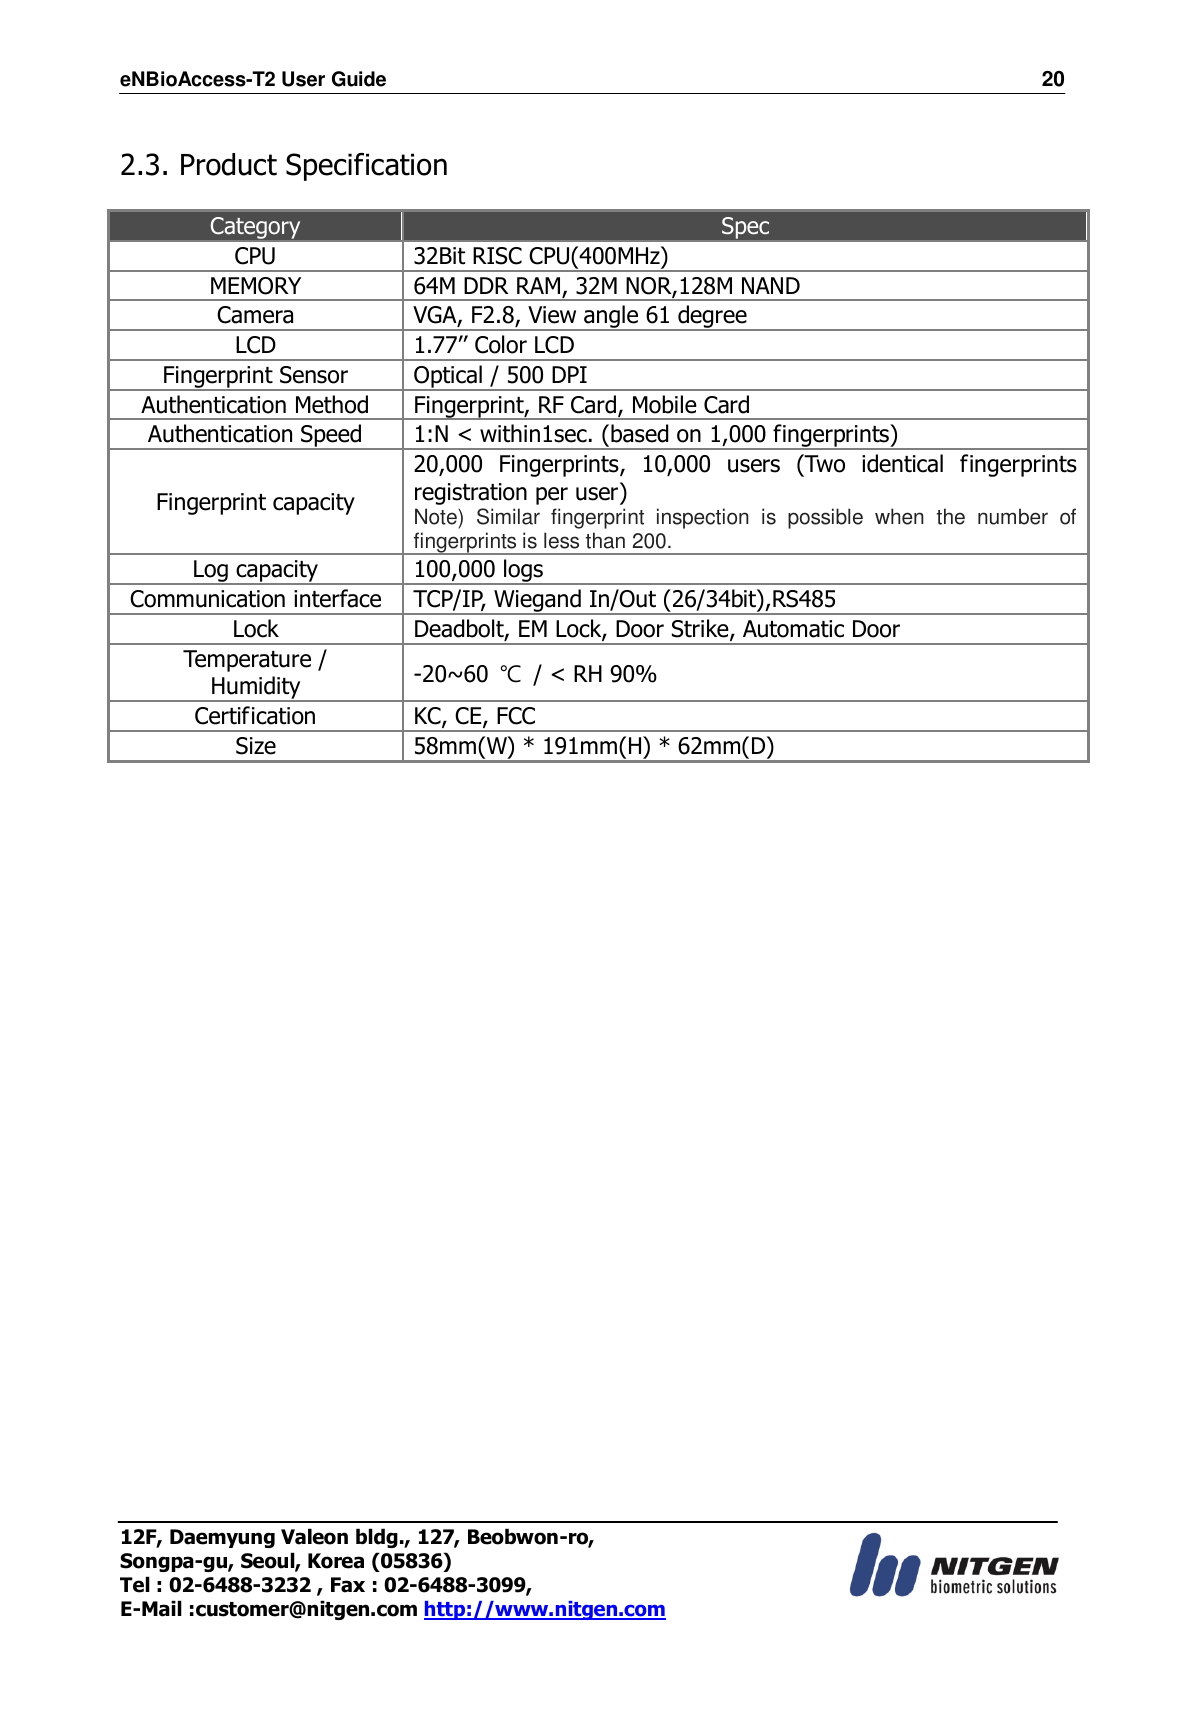 eNBioAccess-T2 User Guide                                                                    20 12F, Daemyung Valeon bldg., 127, Beobwon-ro, Songpa-gu, Seoul, Korea (05836) Tel : 02-6488-3232 , Fax : 02-6488-3099,   E-Mail :customer@nitgen.com http://www.nitgen.com   2.3. Product Specification  Category Spec CPU 32Bit RISC CPU(400MHz) MEMORY 64M DDR RAM, 32M NOR,128M NAND Camera VGA, F2.8, View angle 61 degree LCD 1.77’’ Color LCD Fingerprint Sensor Optical / 500 DPI Authentication Method Fingerprint, RF Card, Mobile Card Authentication Speed 1:N &lt; within1sec. (based on 1,000 fingerprints) Fingerprint capacity 20,000  Fingerprints,  10,000  users  (Two  identical  fingerprints registration per user) Note)  Similar  fingerprint  inspection  is  possible  when  the  number  of fingerprints is less than 200. Log capacity 100,000 logs Communication interface TCP/IP, Wiegand In/Out (26/34bit),RS485 Lock Deadbolt, EM Lock, Door Strike, Automatic Door Temperature / Humidity -20~60  ℃  / &lt; RH 90% Certification KC, CE, FCC Size 58mm(W) * 191mm(H) * 62mm(D) 